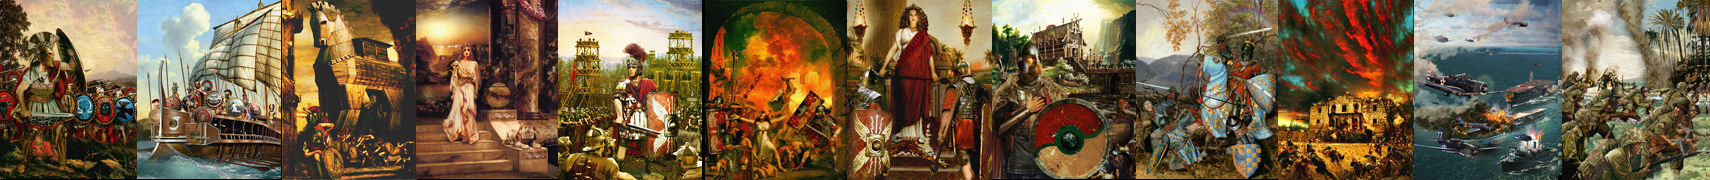 fine art historical painting fantasy illistrations